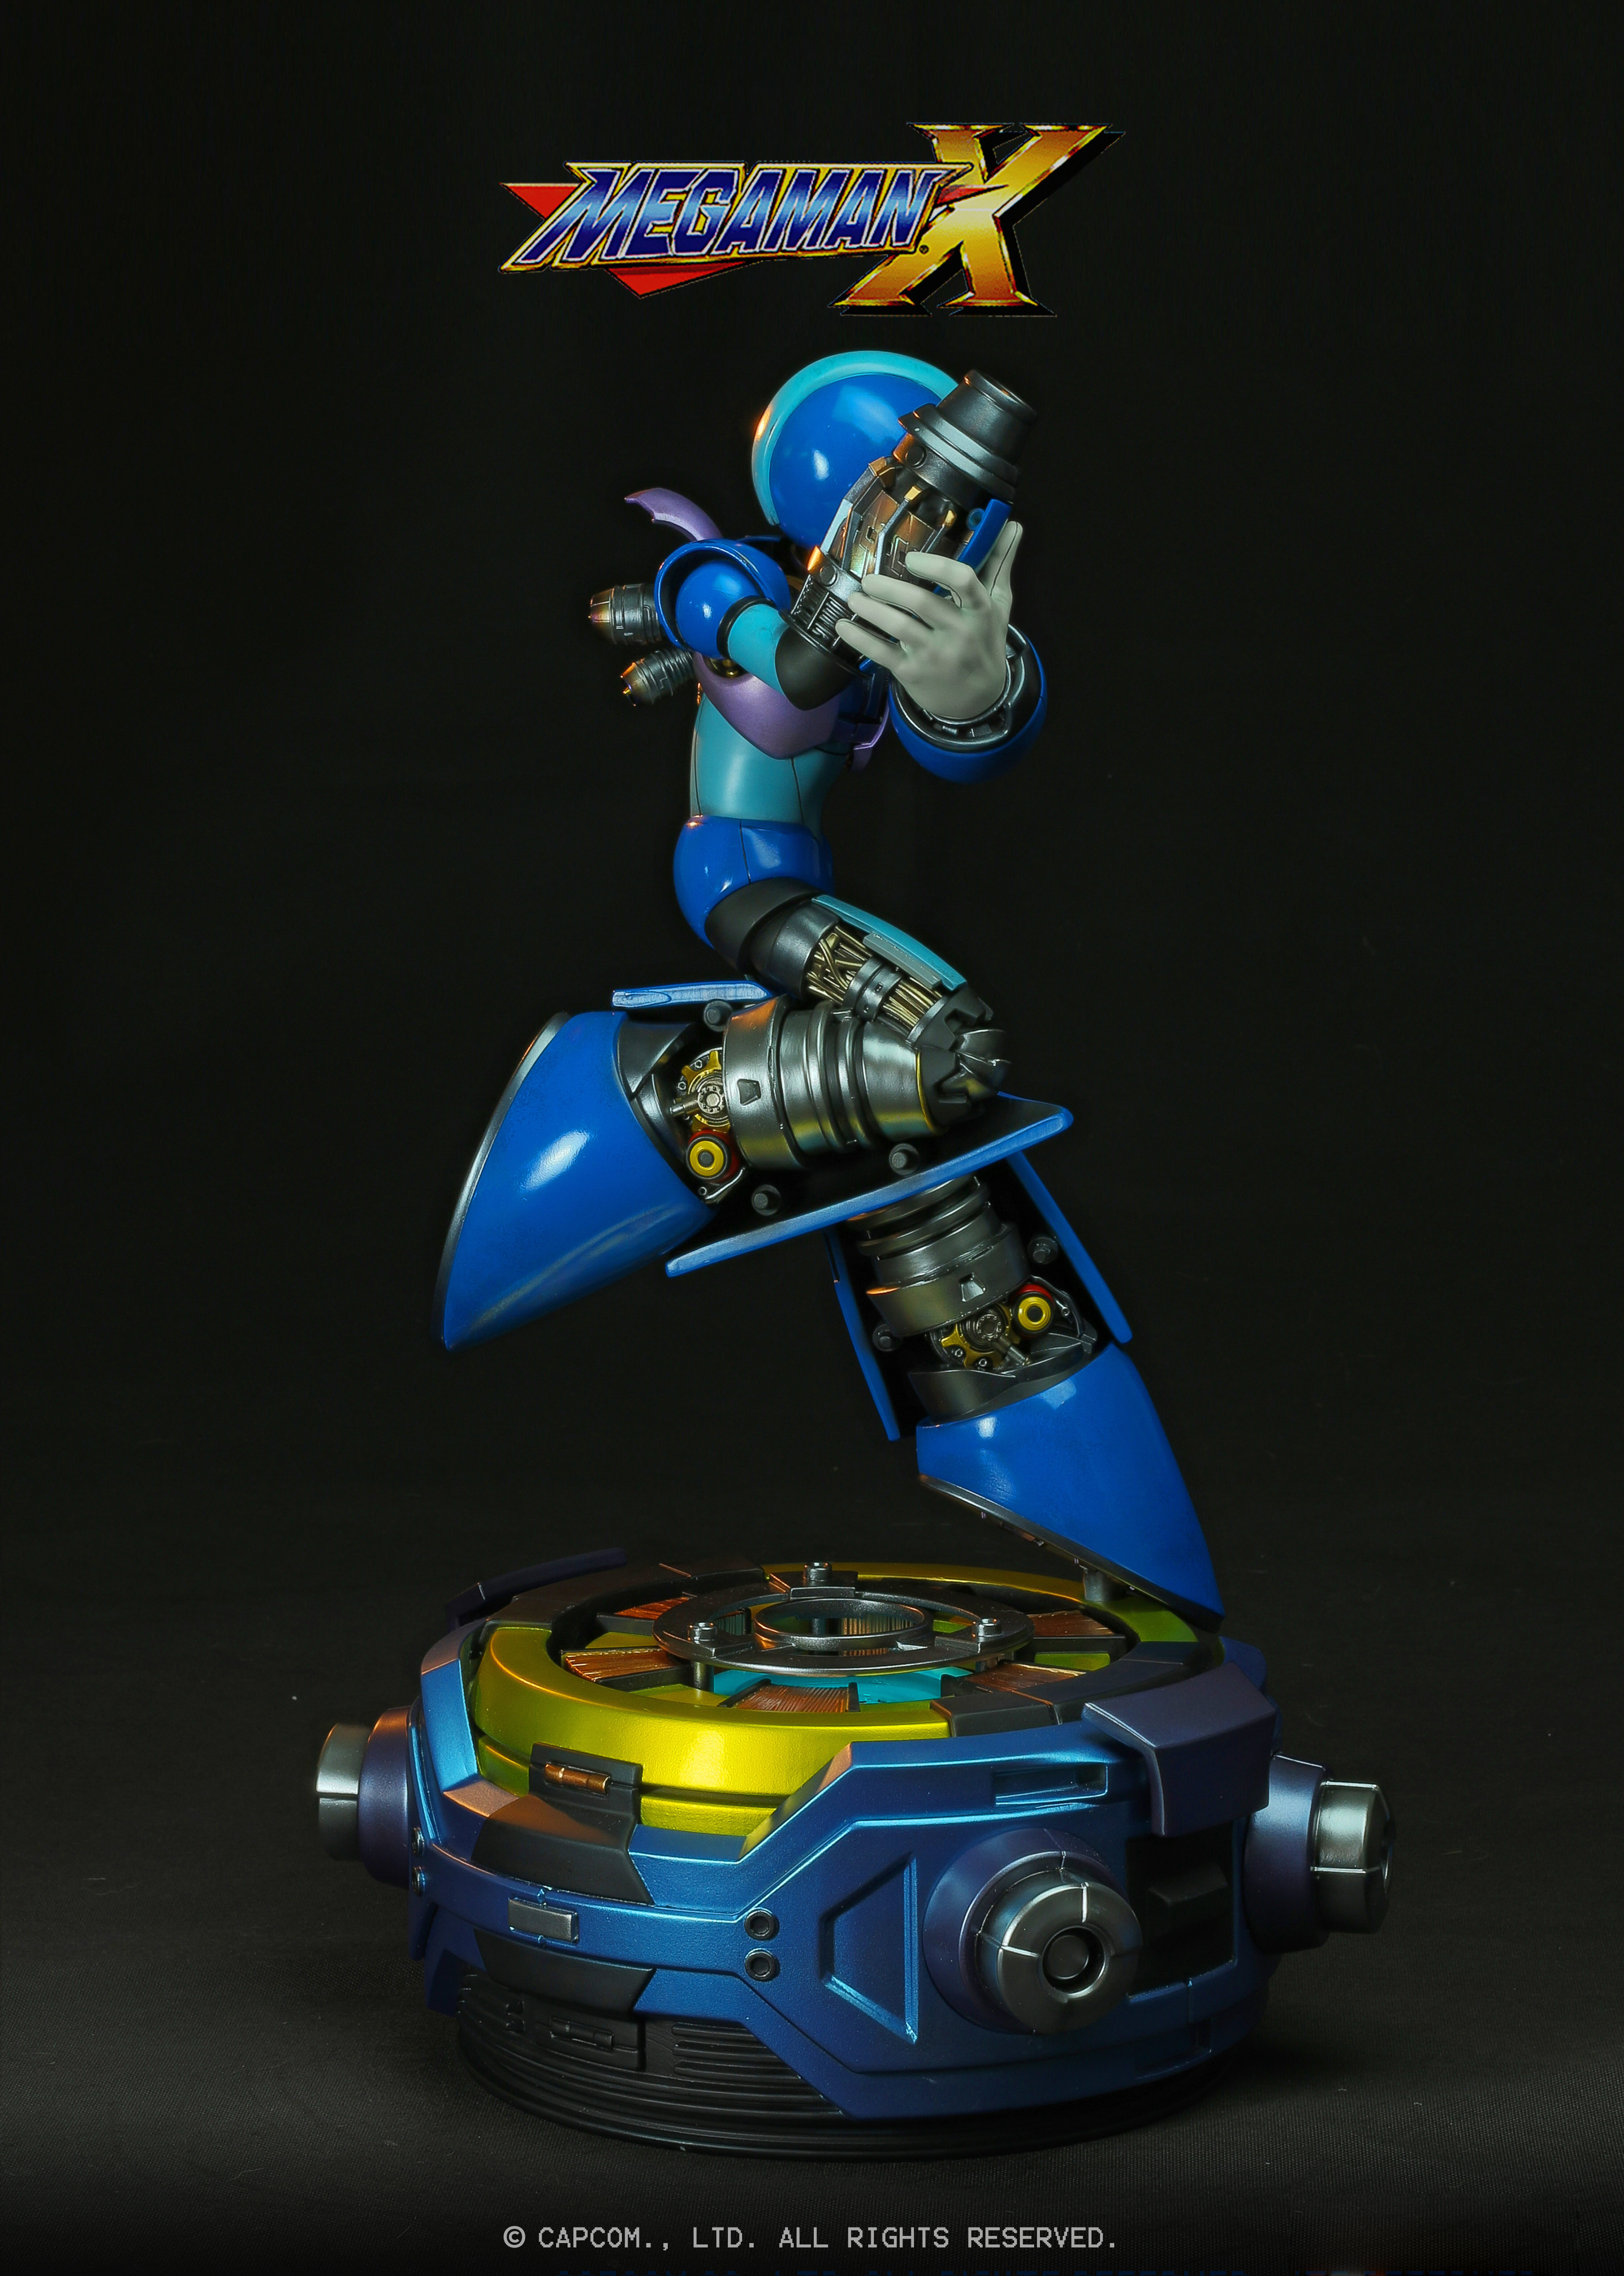 Megaman X Statue
Artist: Mufizal Mokhtar